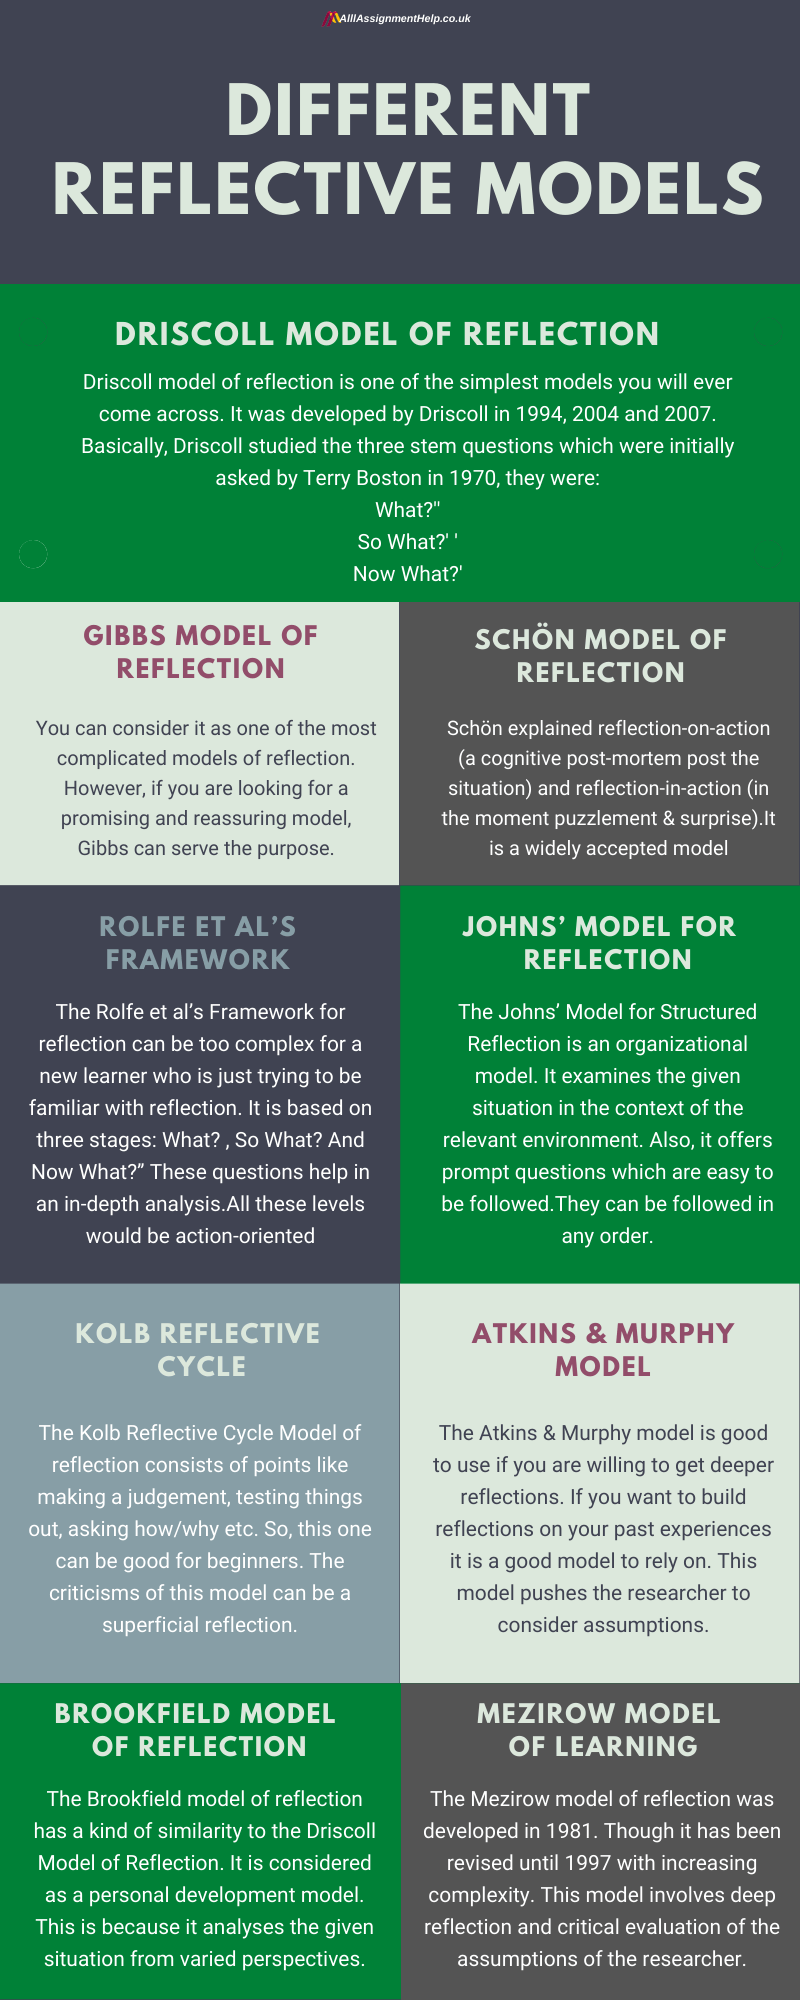 rolfes framework for reflective practice 2001